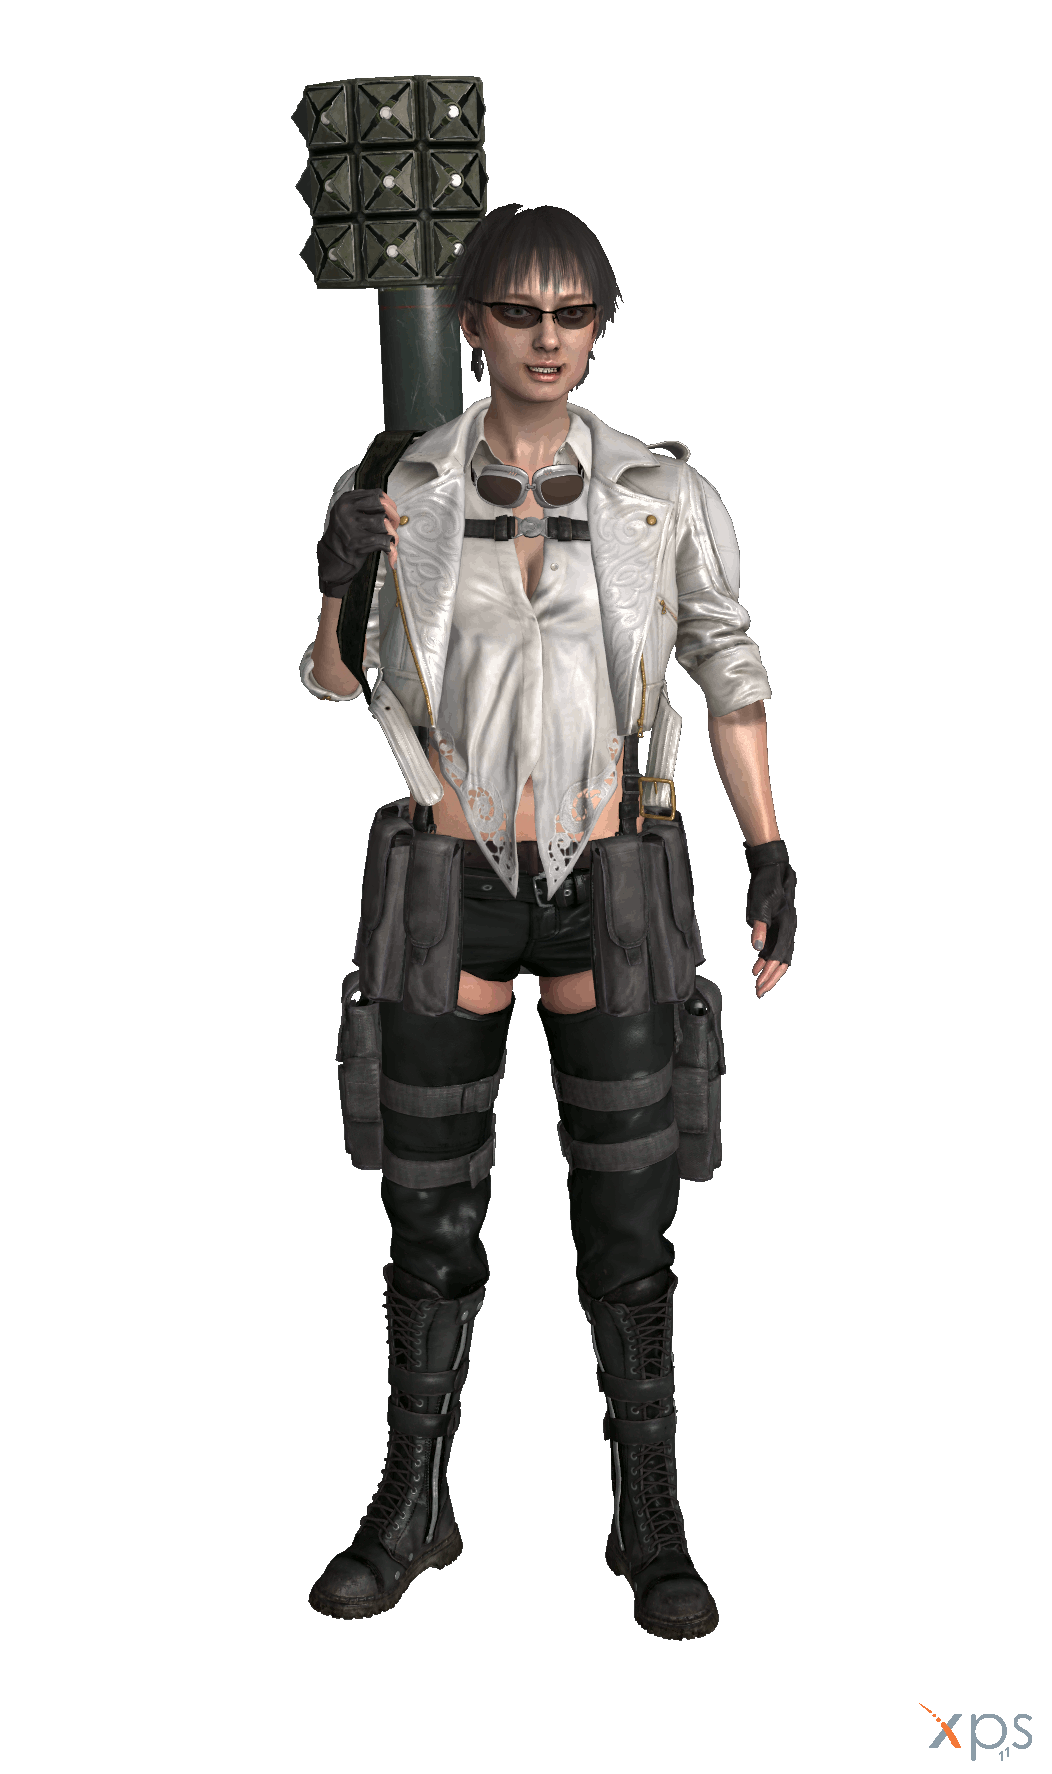 Lady - Alternate costume from DMC3 by Narga-Lifestream on DeviantArt